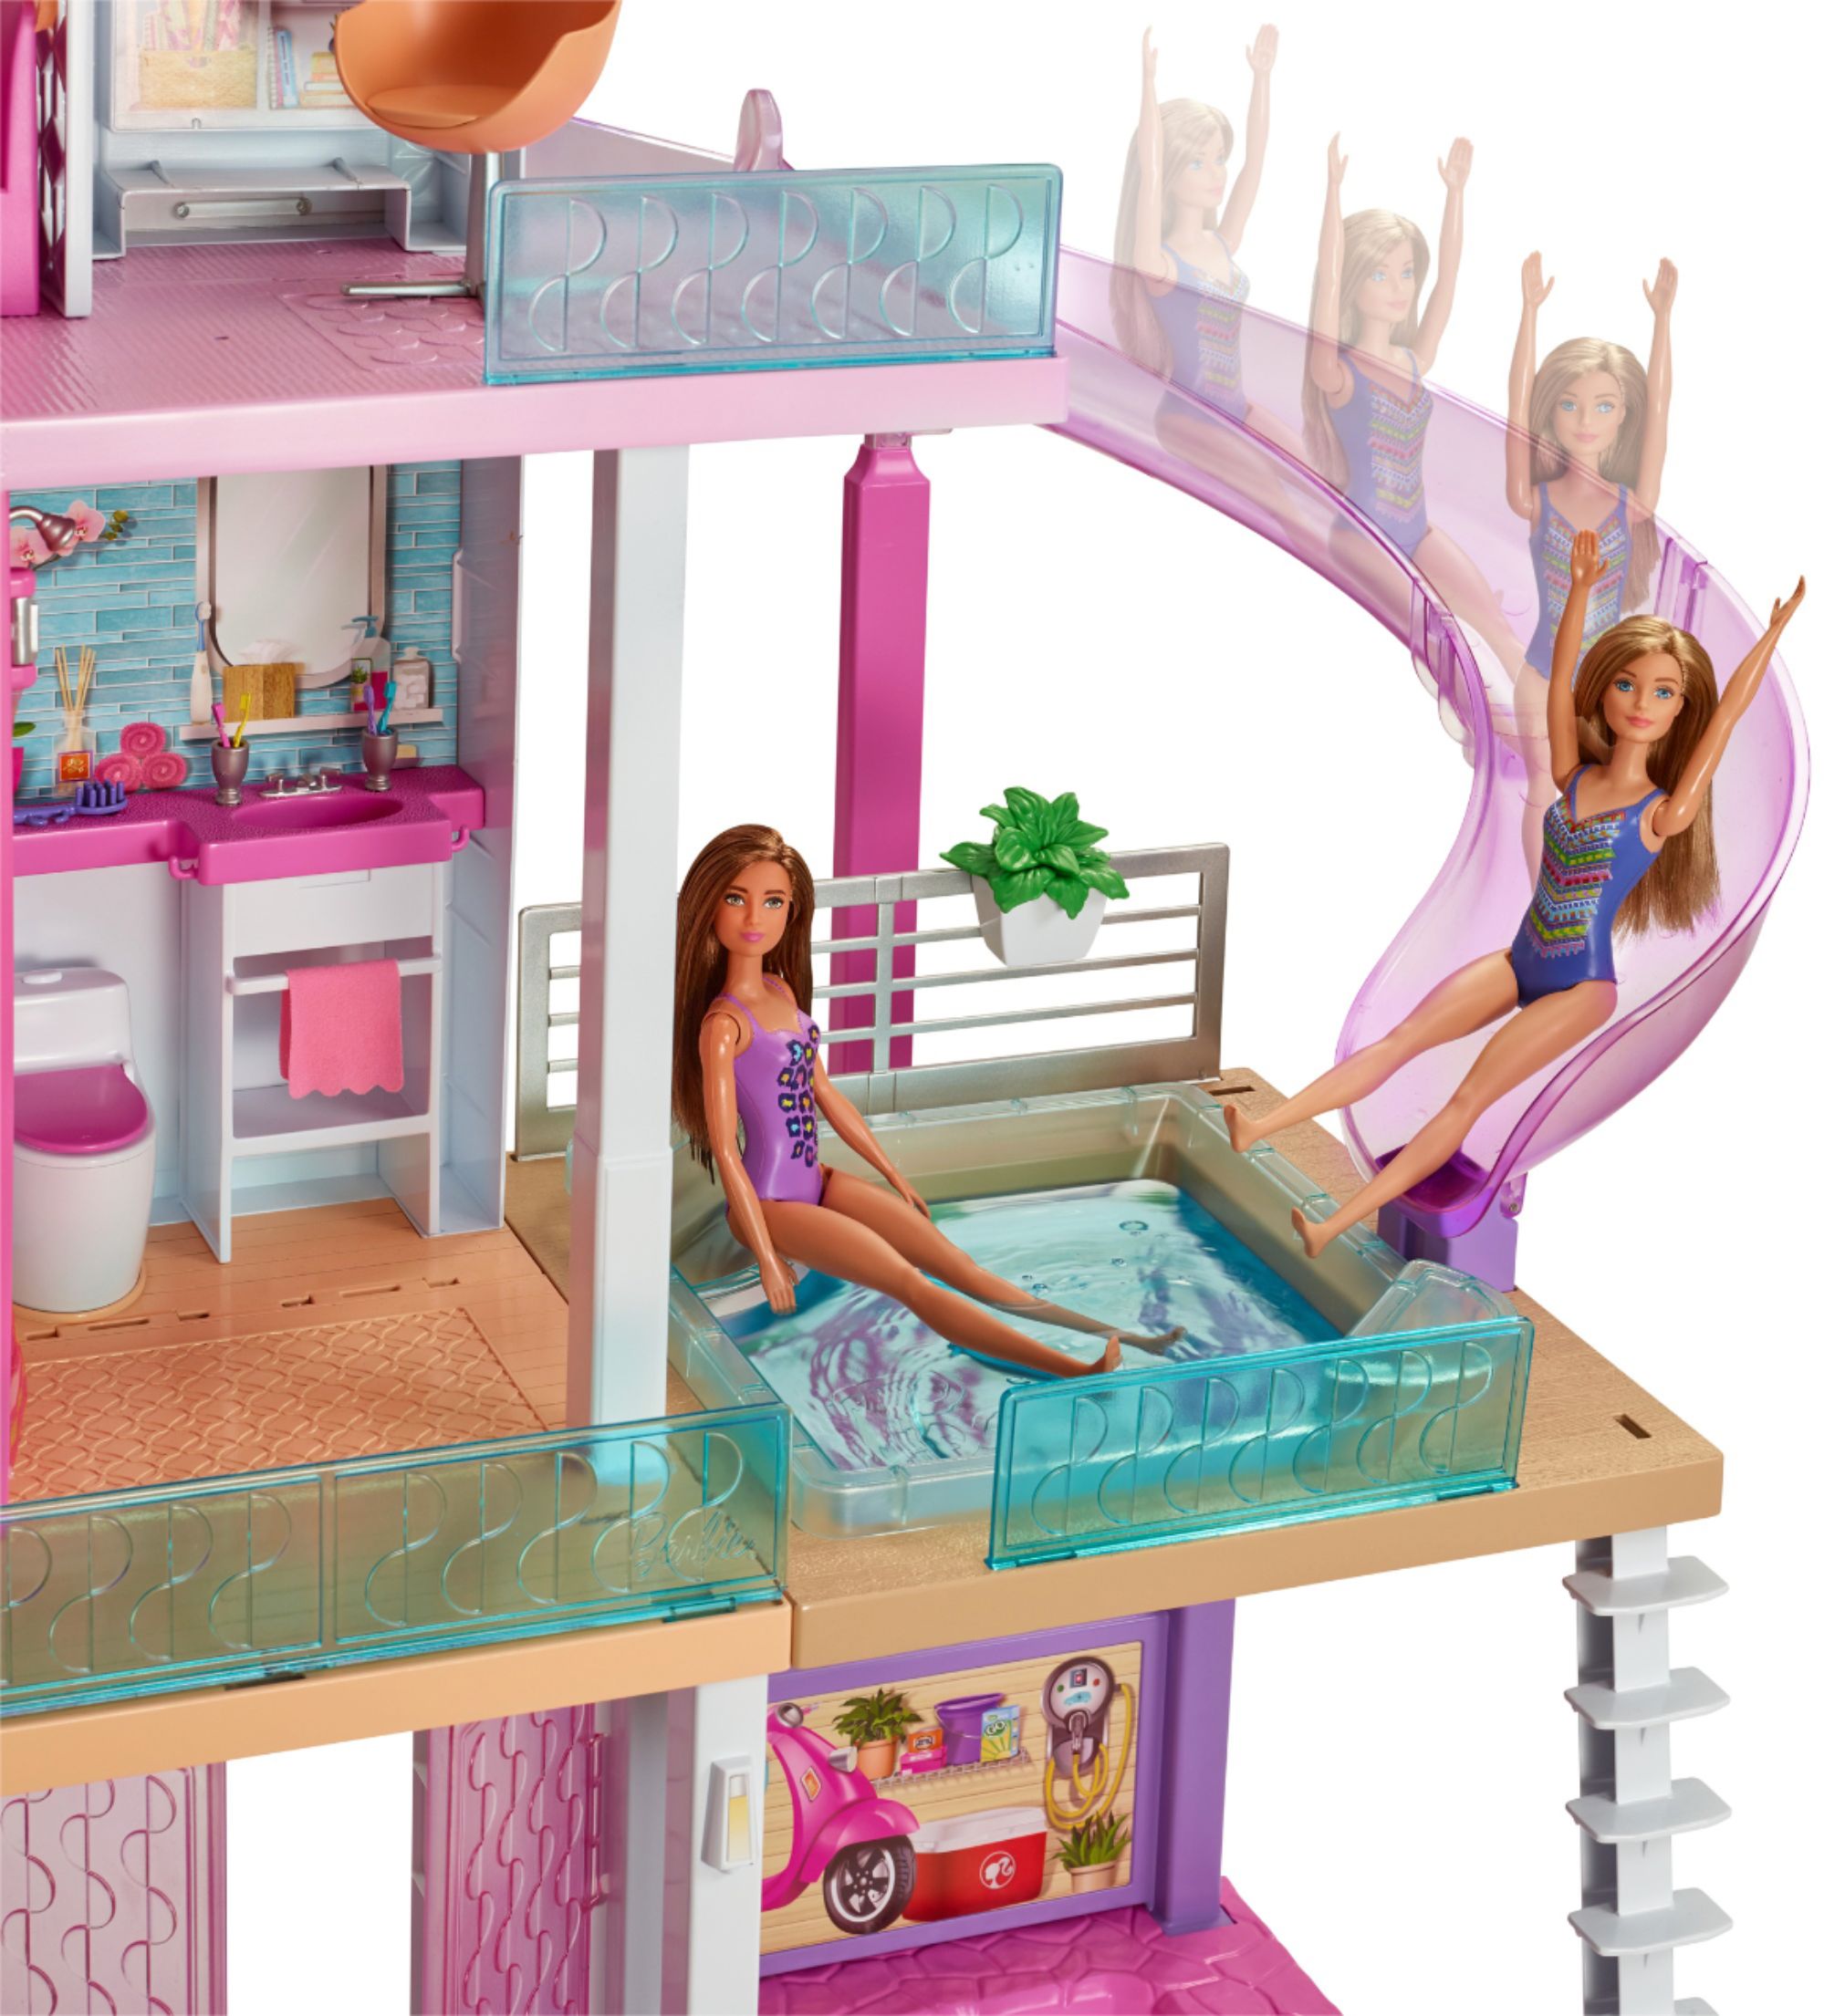 where can i buy a barbie dream house